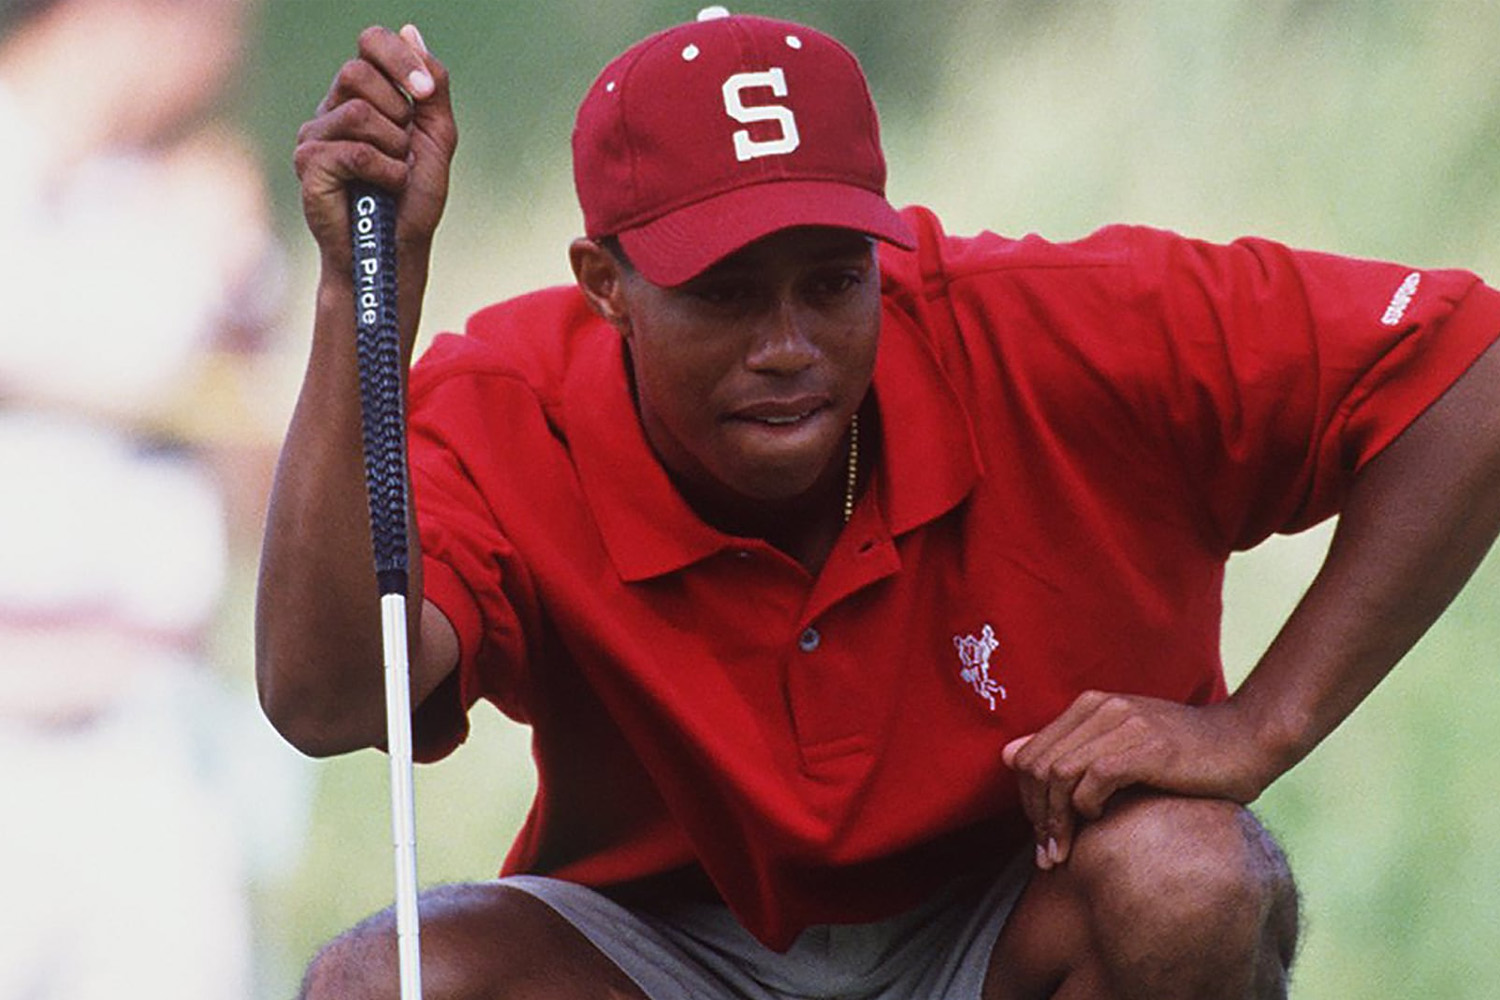 1996 Tiger Woods